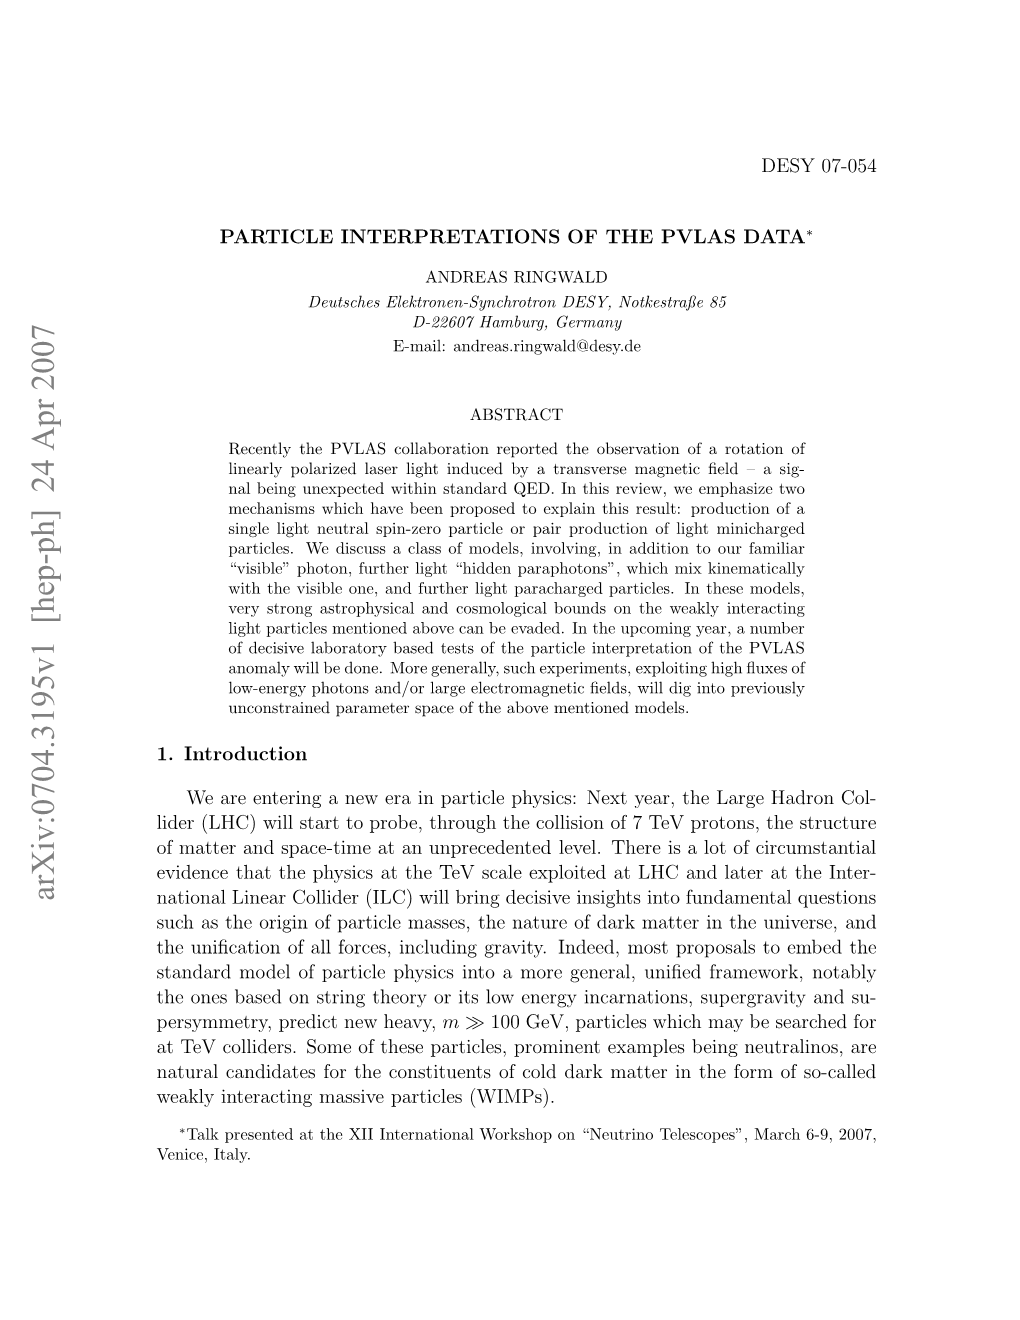 Particle Interpretations of the PVLAS Data